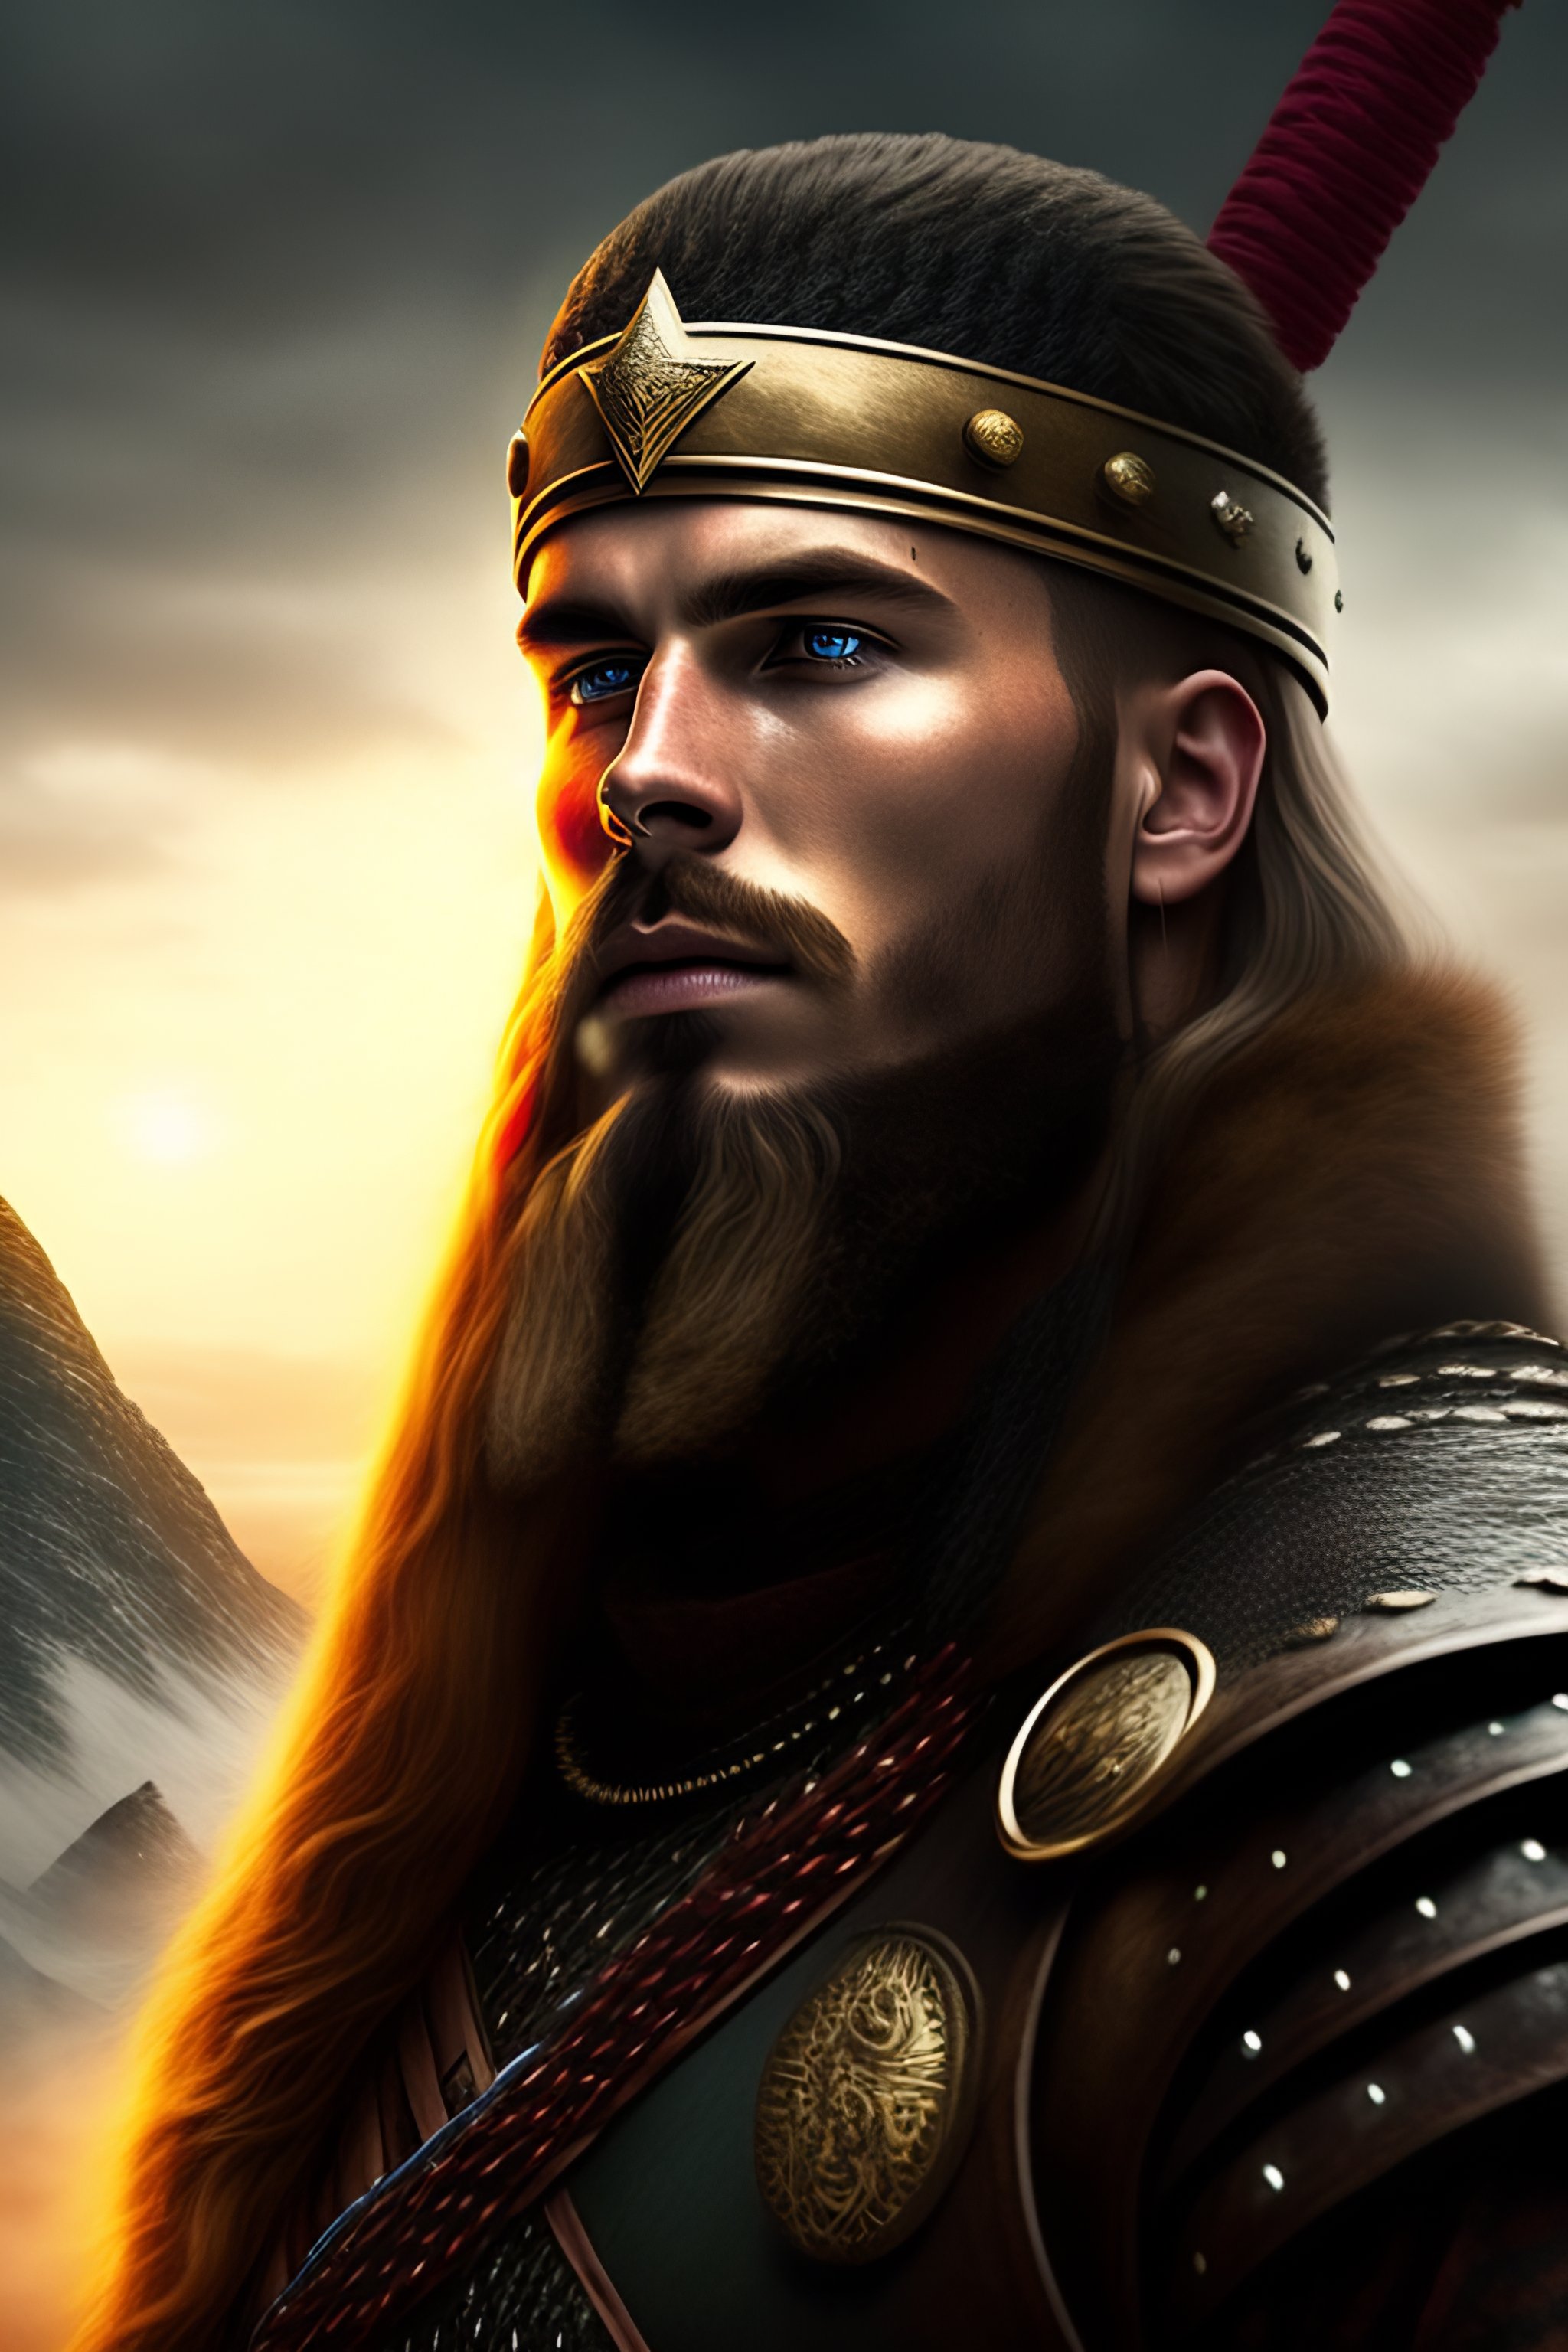 Lexica - A modern soldier vikings